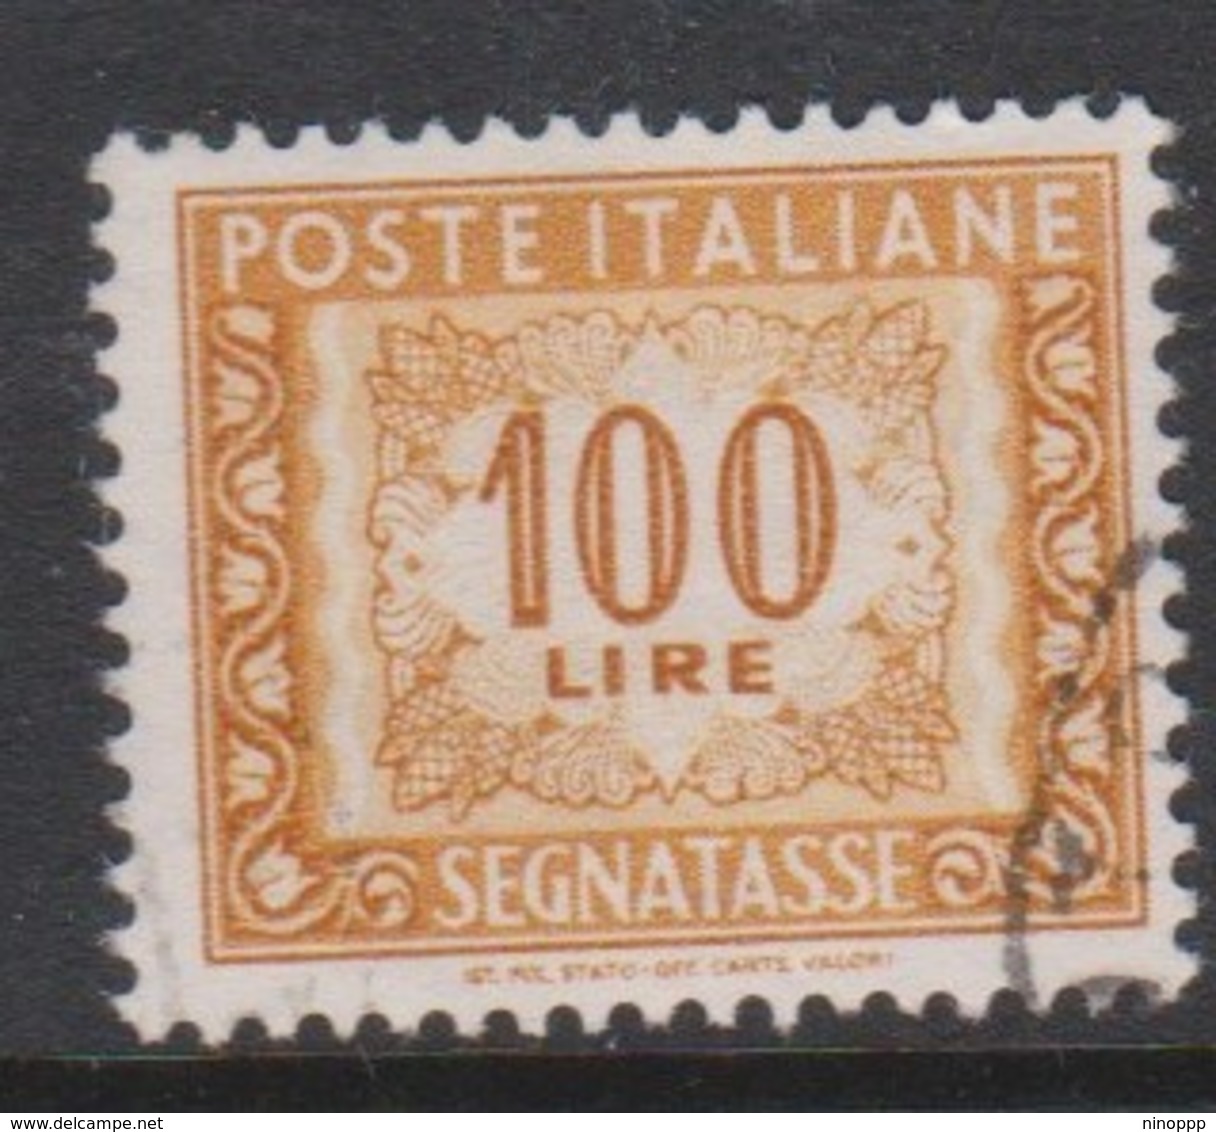 Italy PD 119  1955-81 Republic  Postage Due,watermark Stars,lire 100 Orange Yellow,used - Postage Due